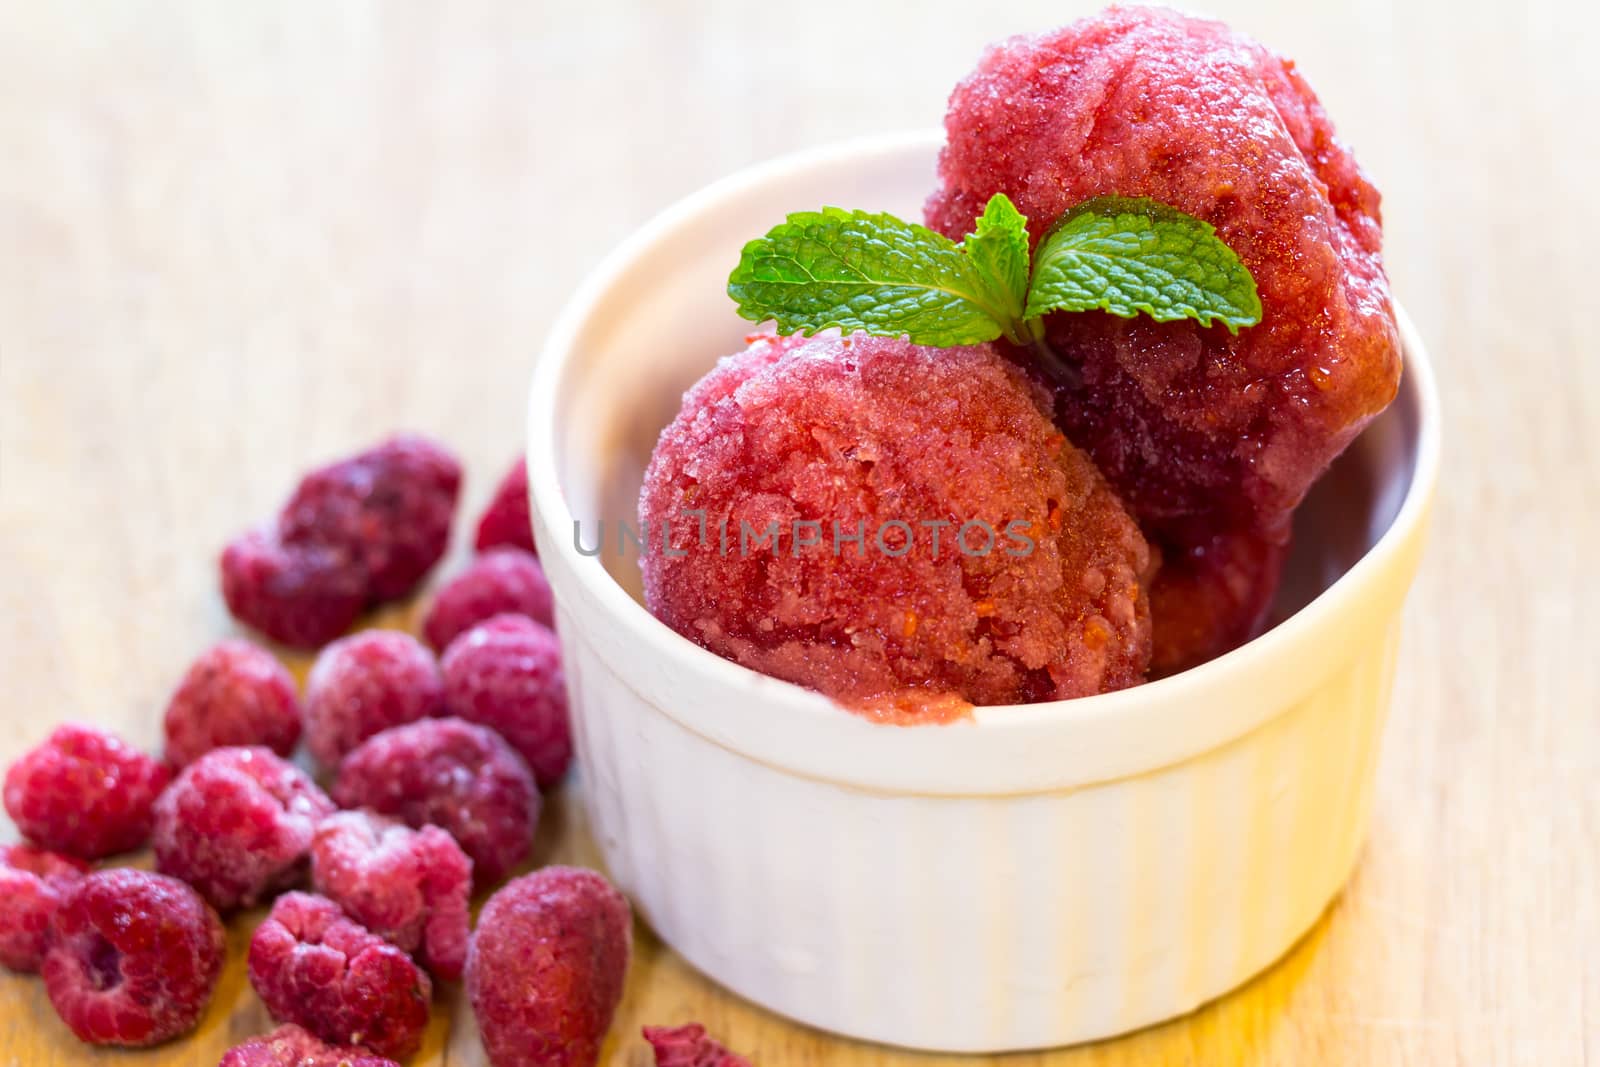 Home made raspberry ice-cream  by wyoosumran